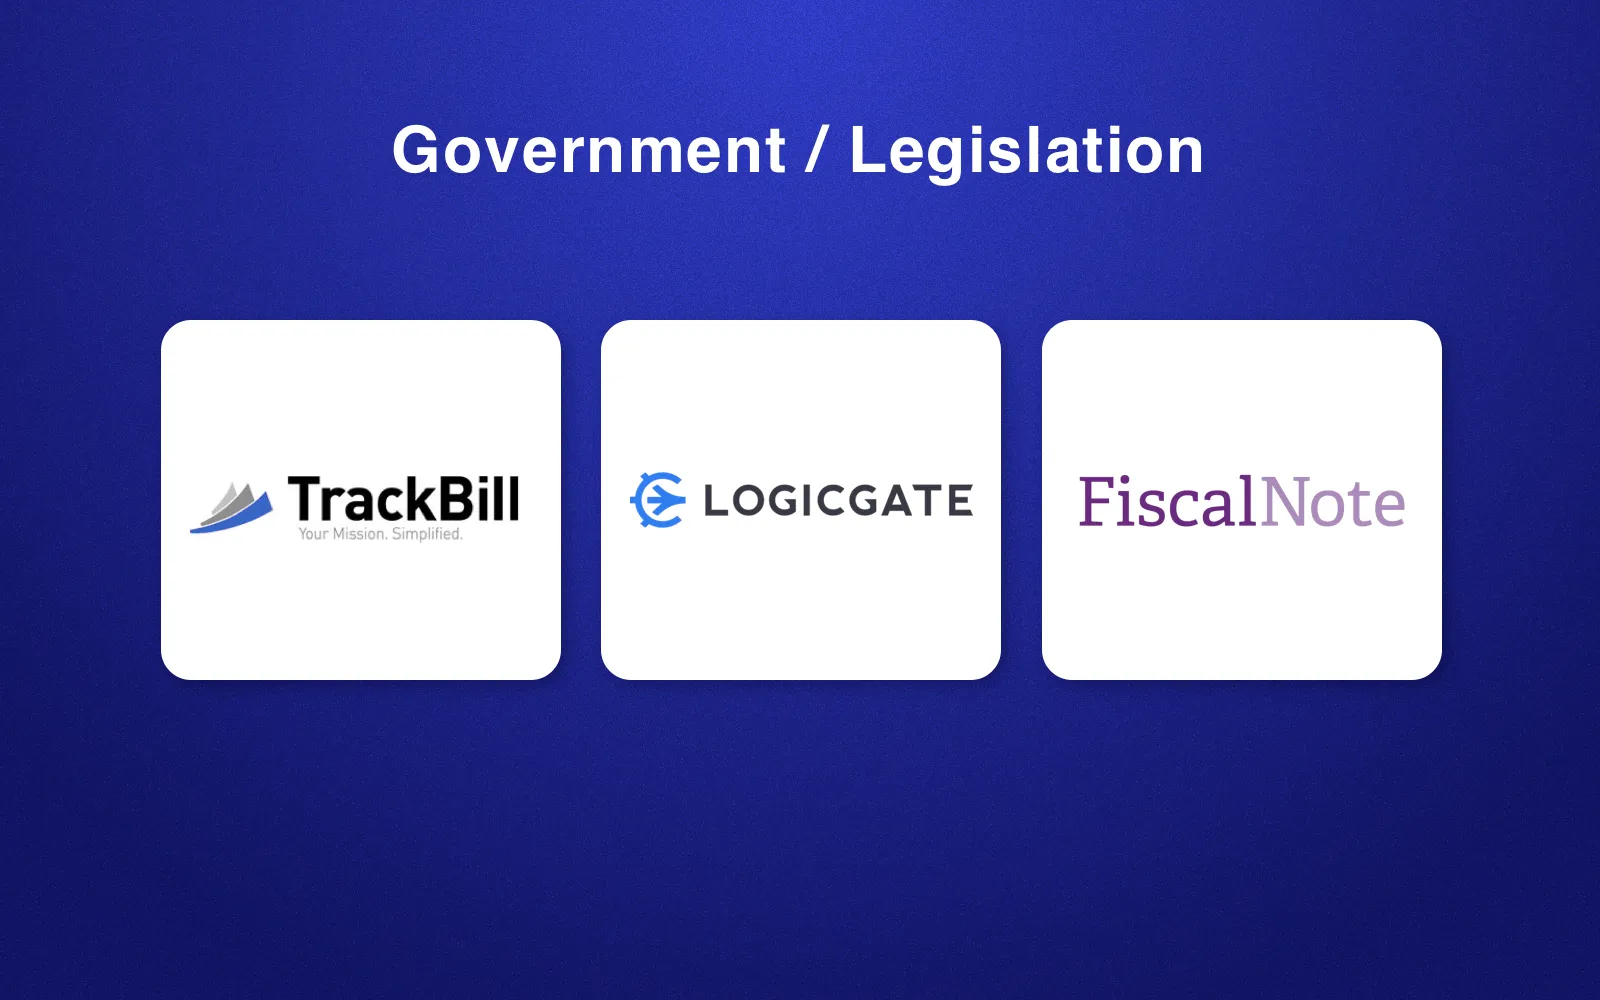 RegTech companies in government/legislation field